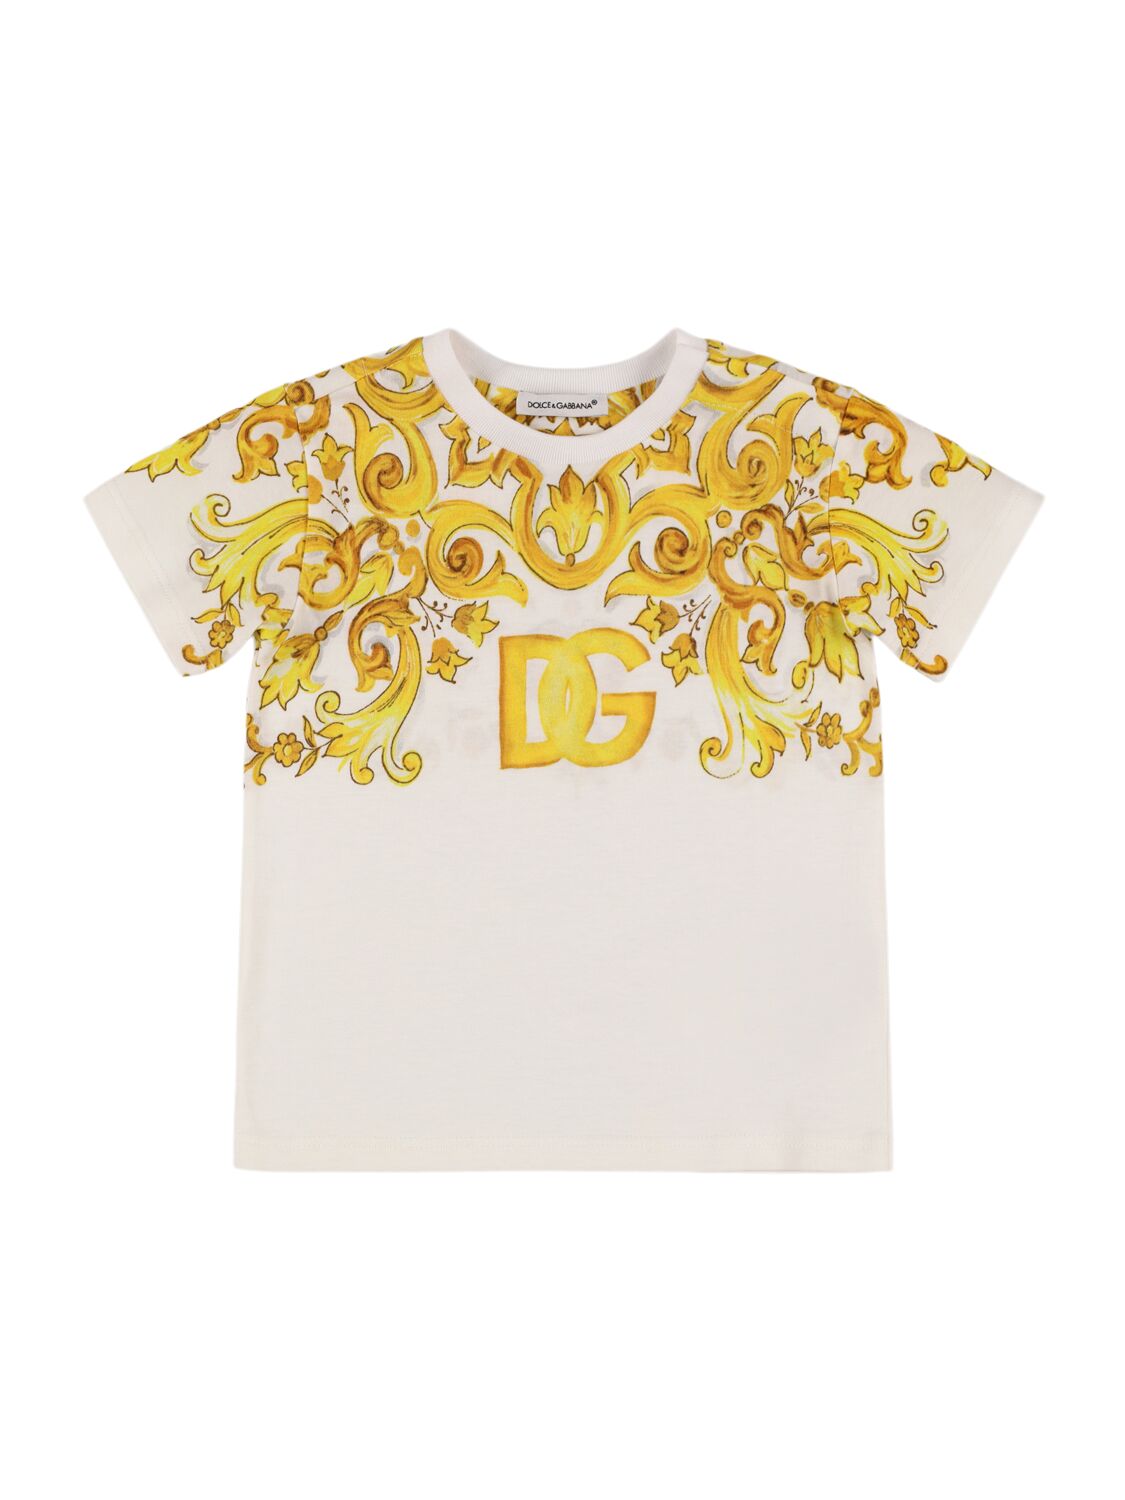 Dolce & Gabbana Maiolica Print Cotton Jersey T-shirt In White